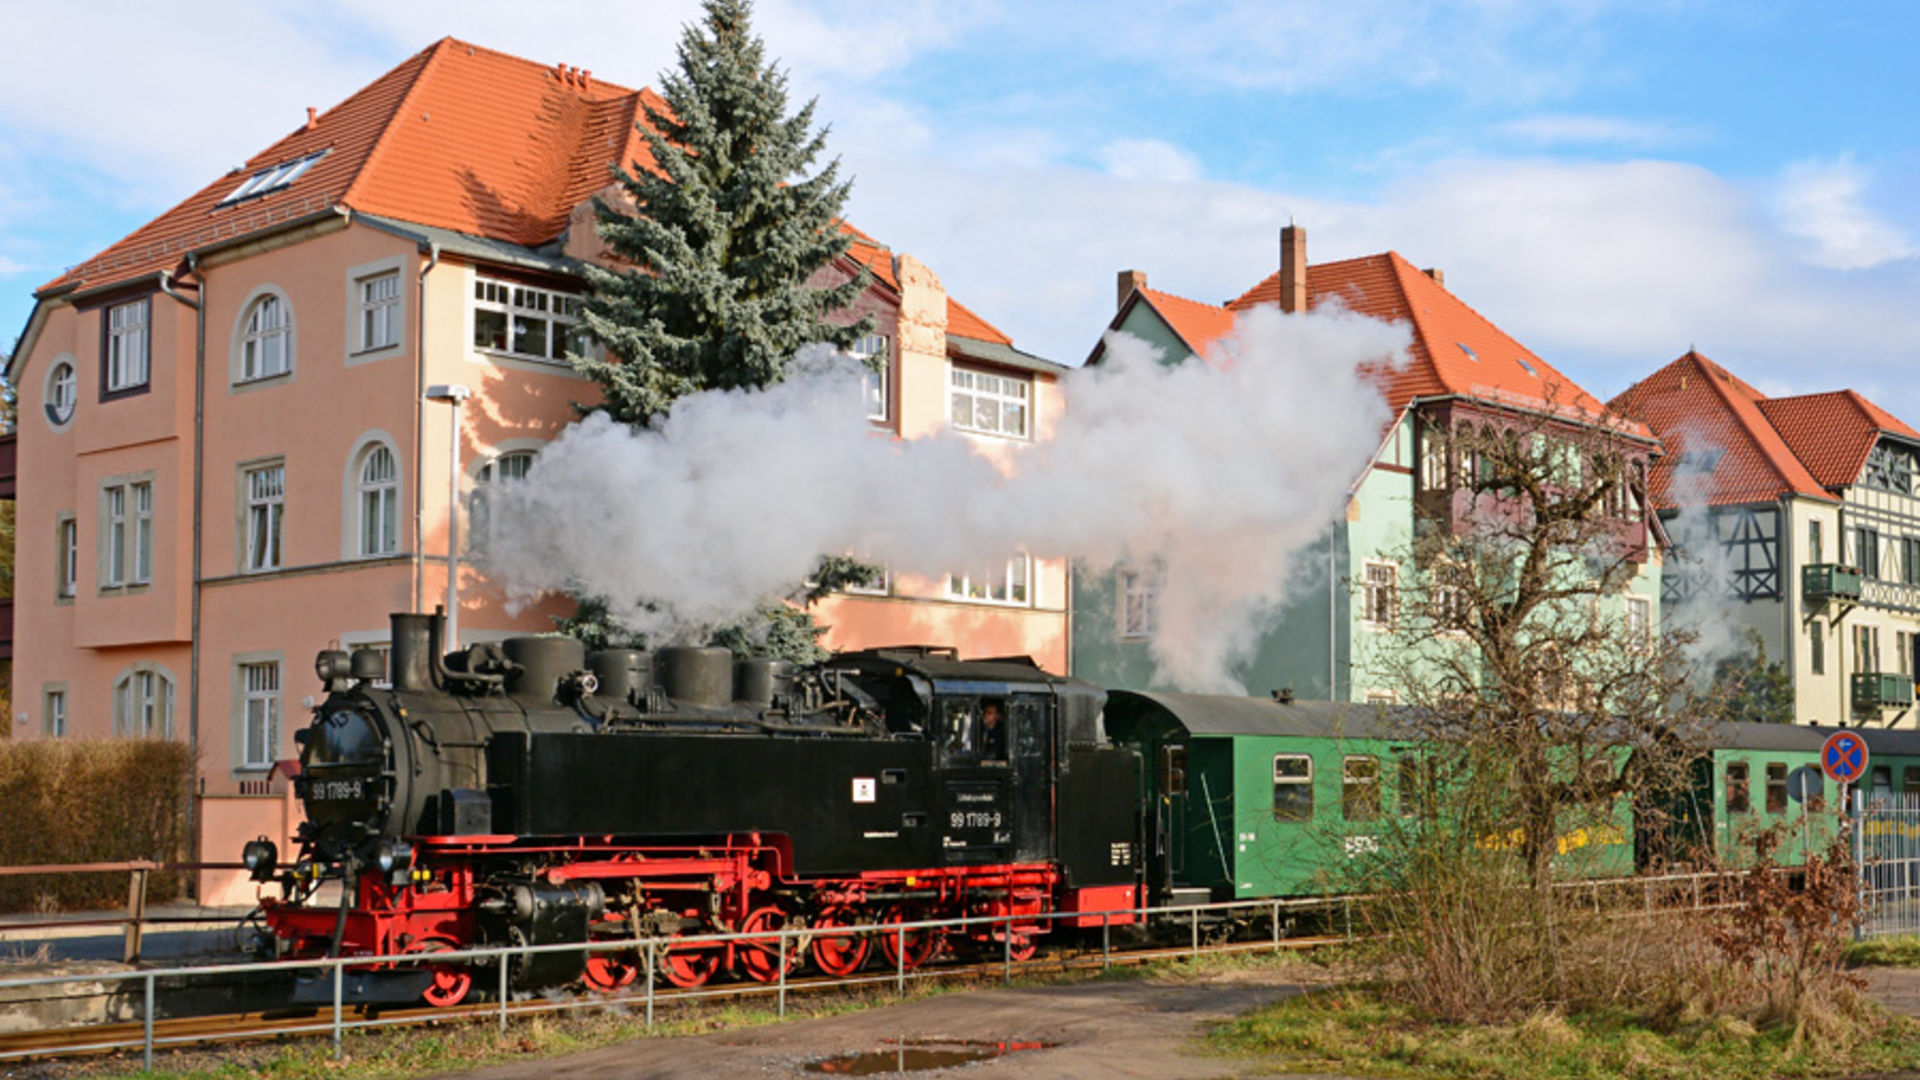 Lößnitzgrundbahn in Radebeul 
© Michael Sperl